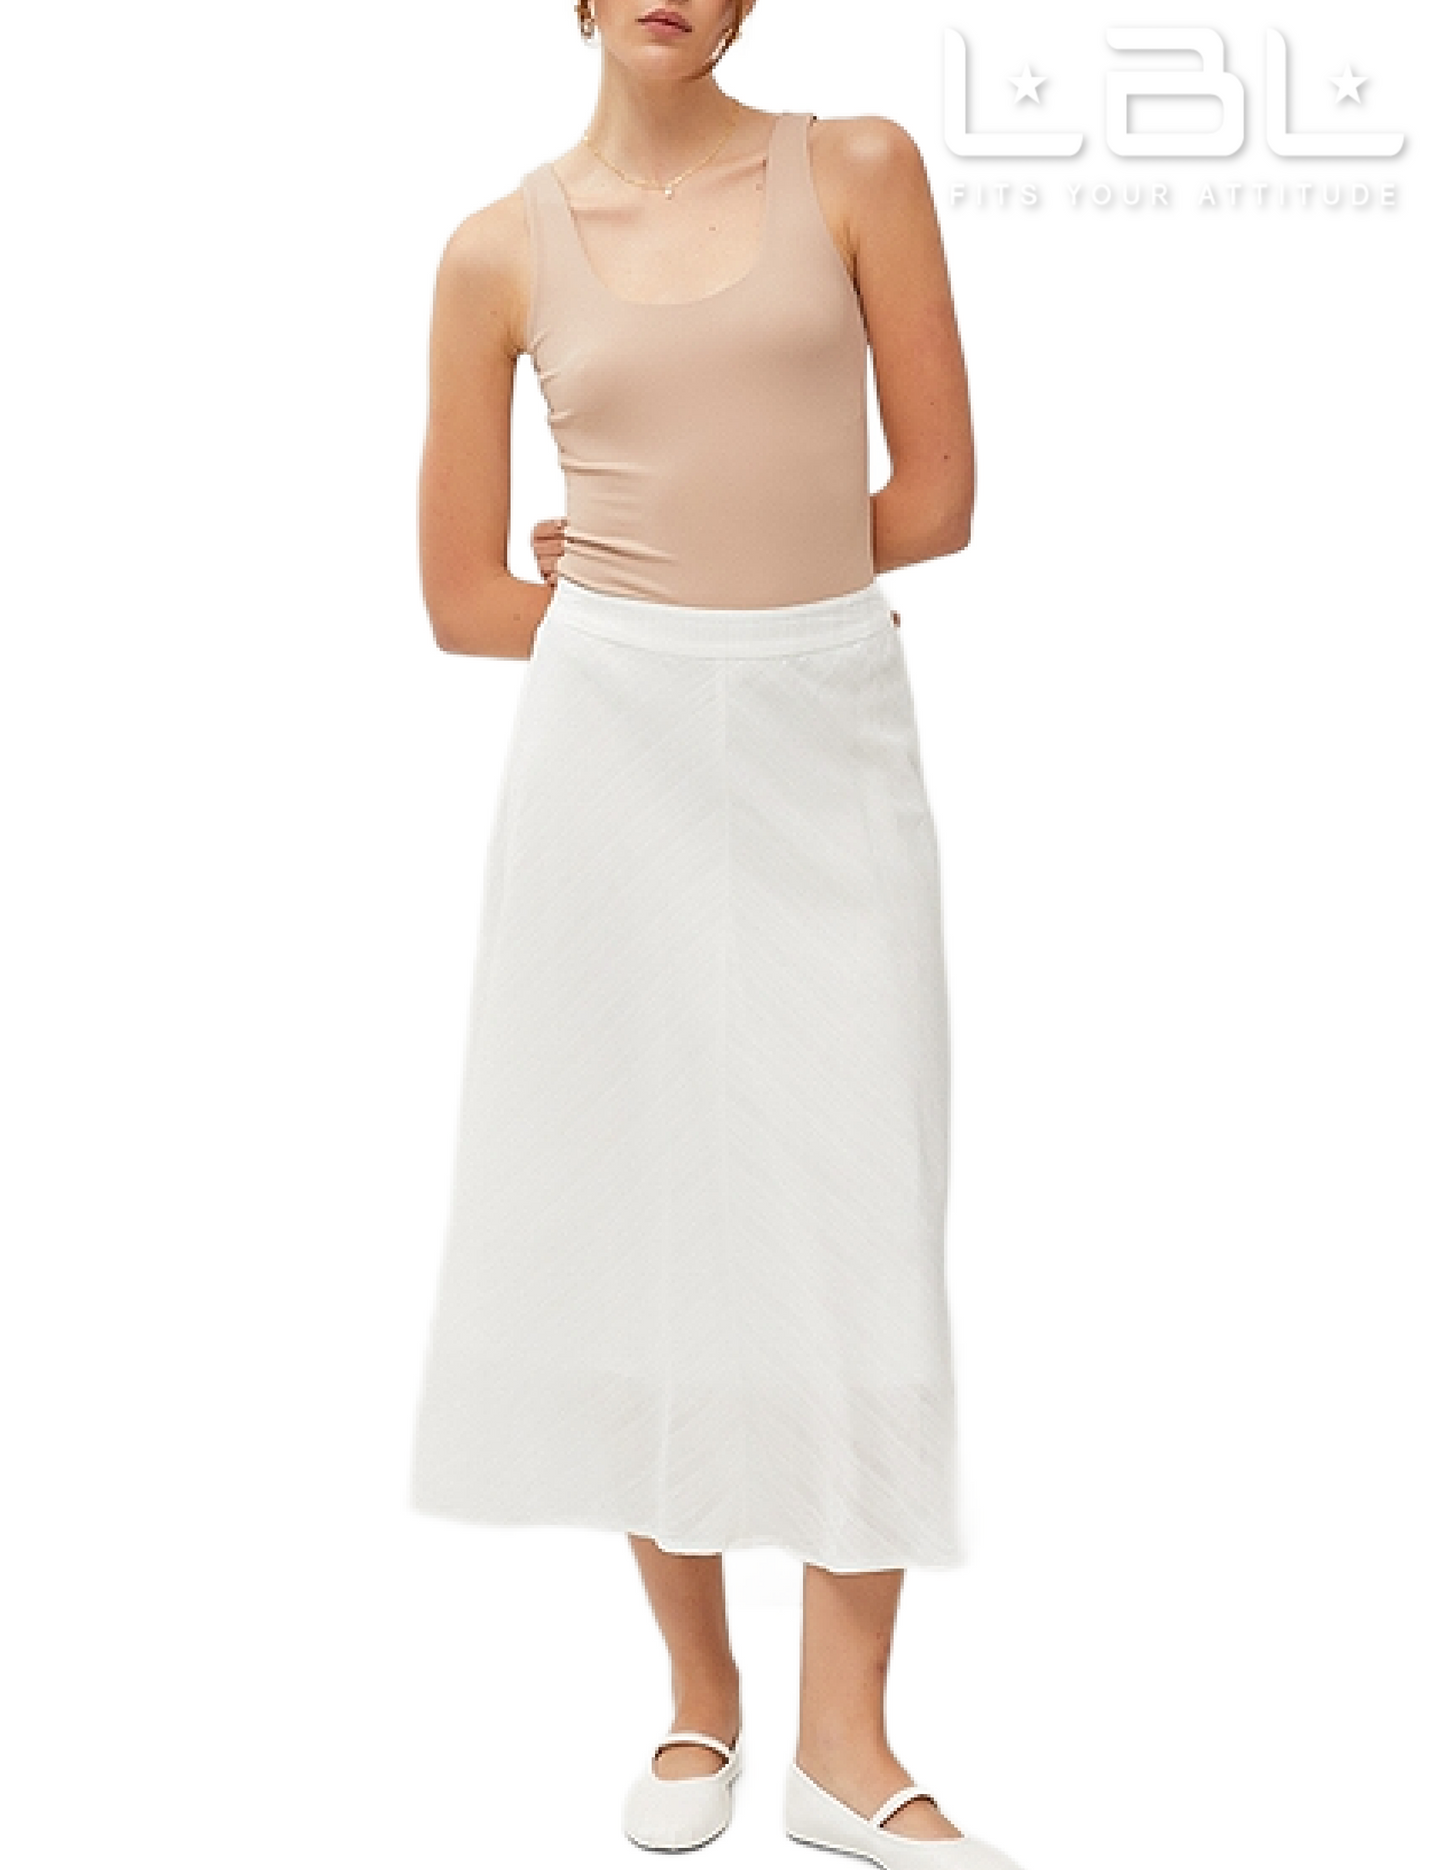 Bias Cut Skirt - Off White